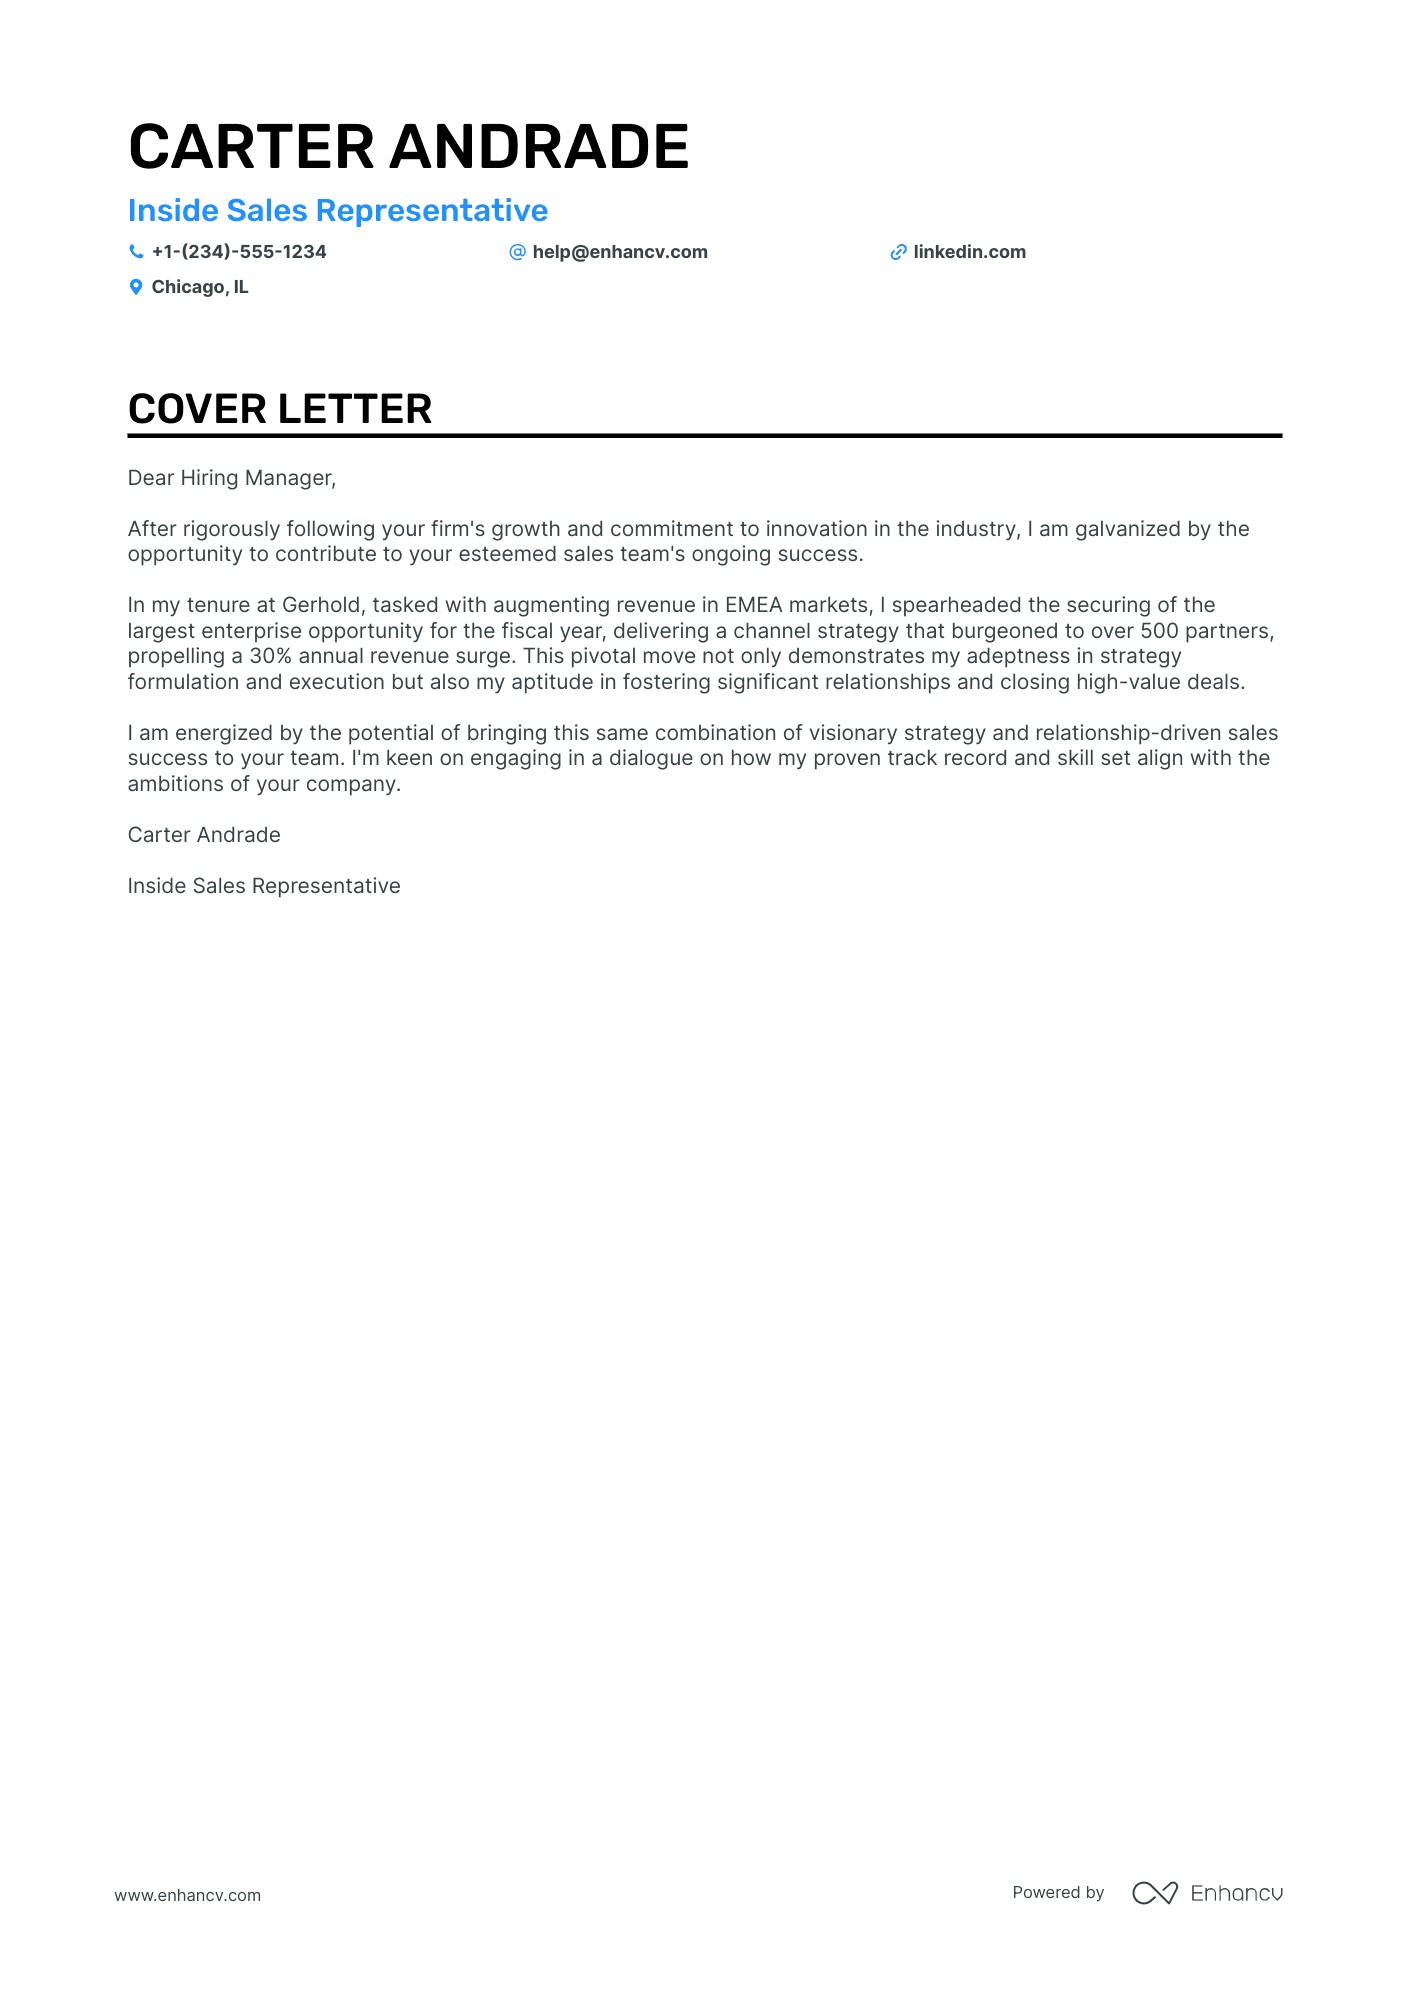 cover letter sample for salesperson job application